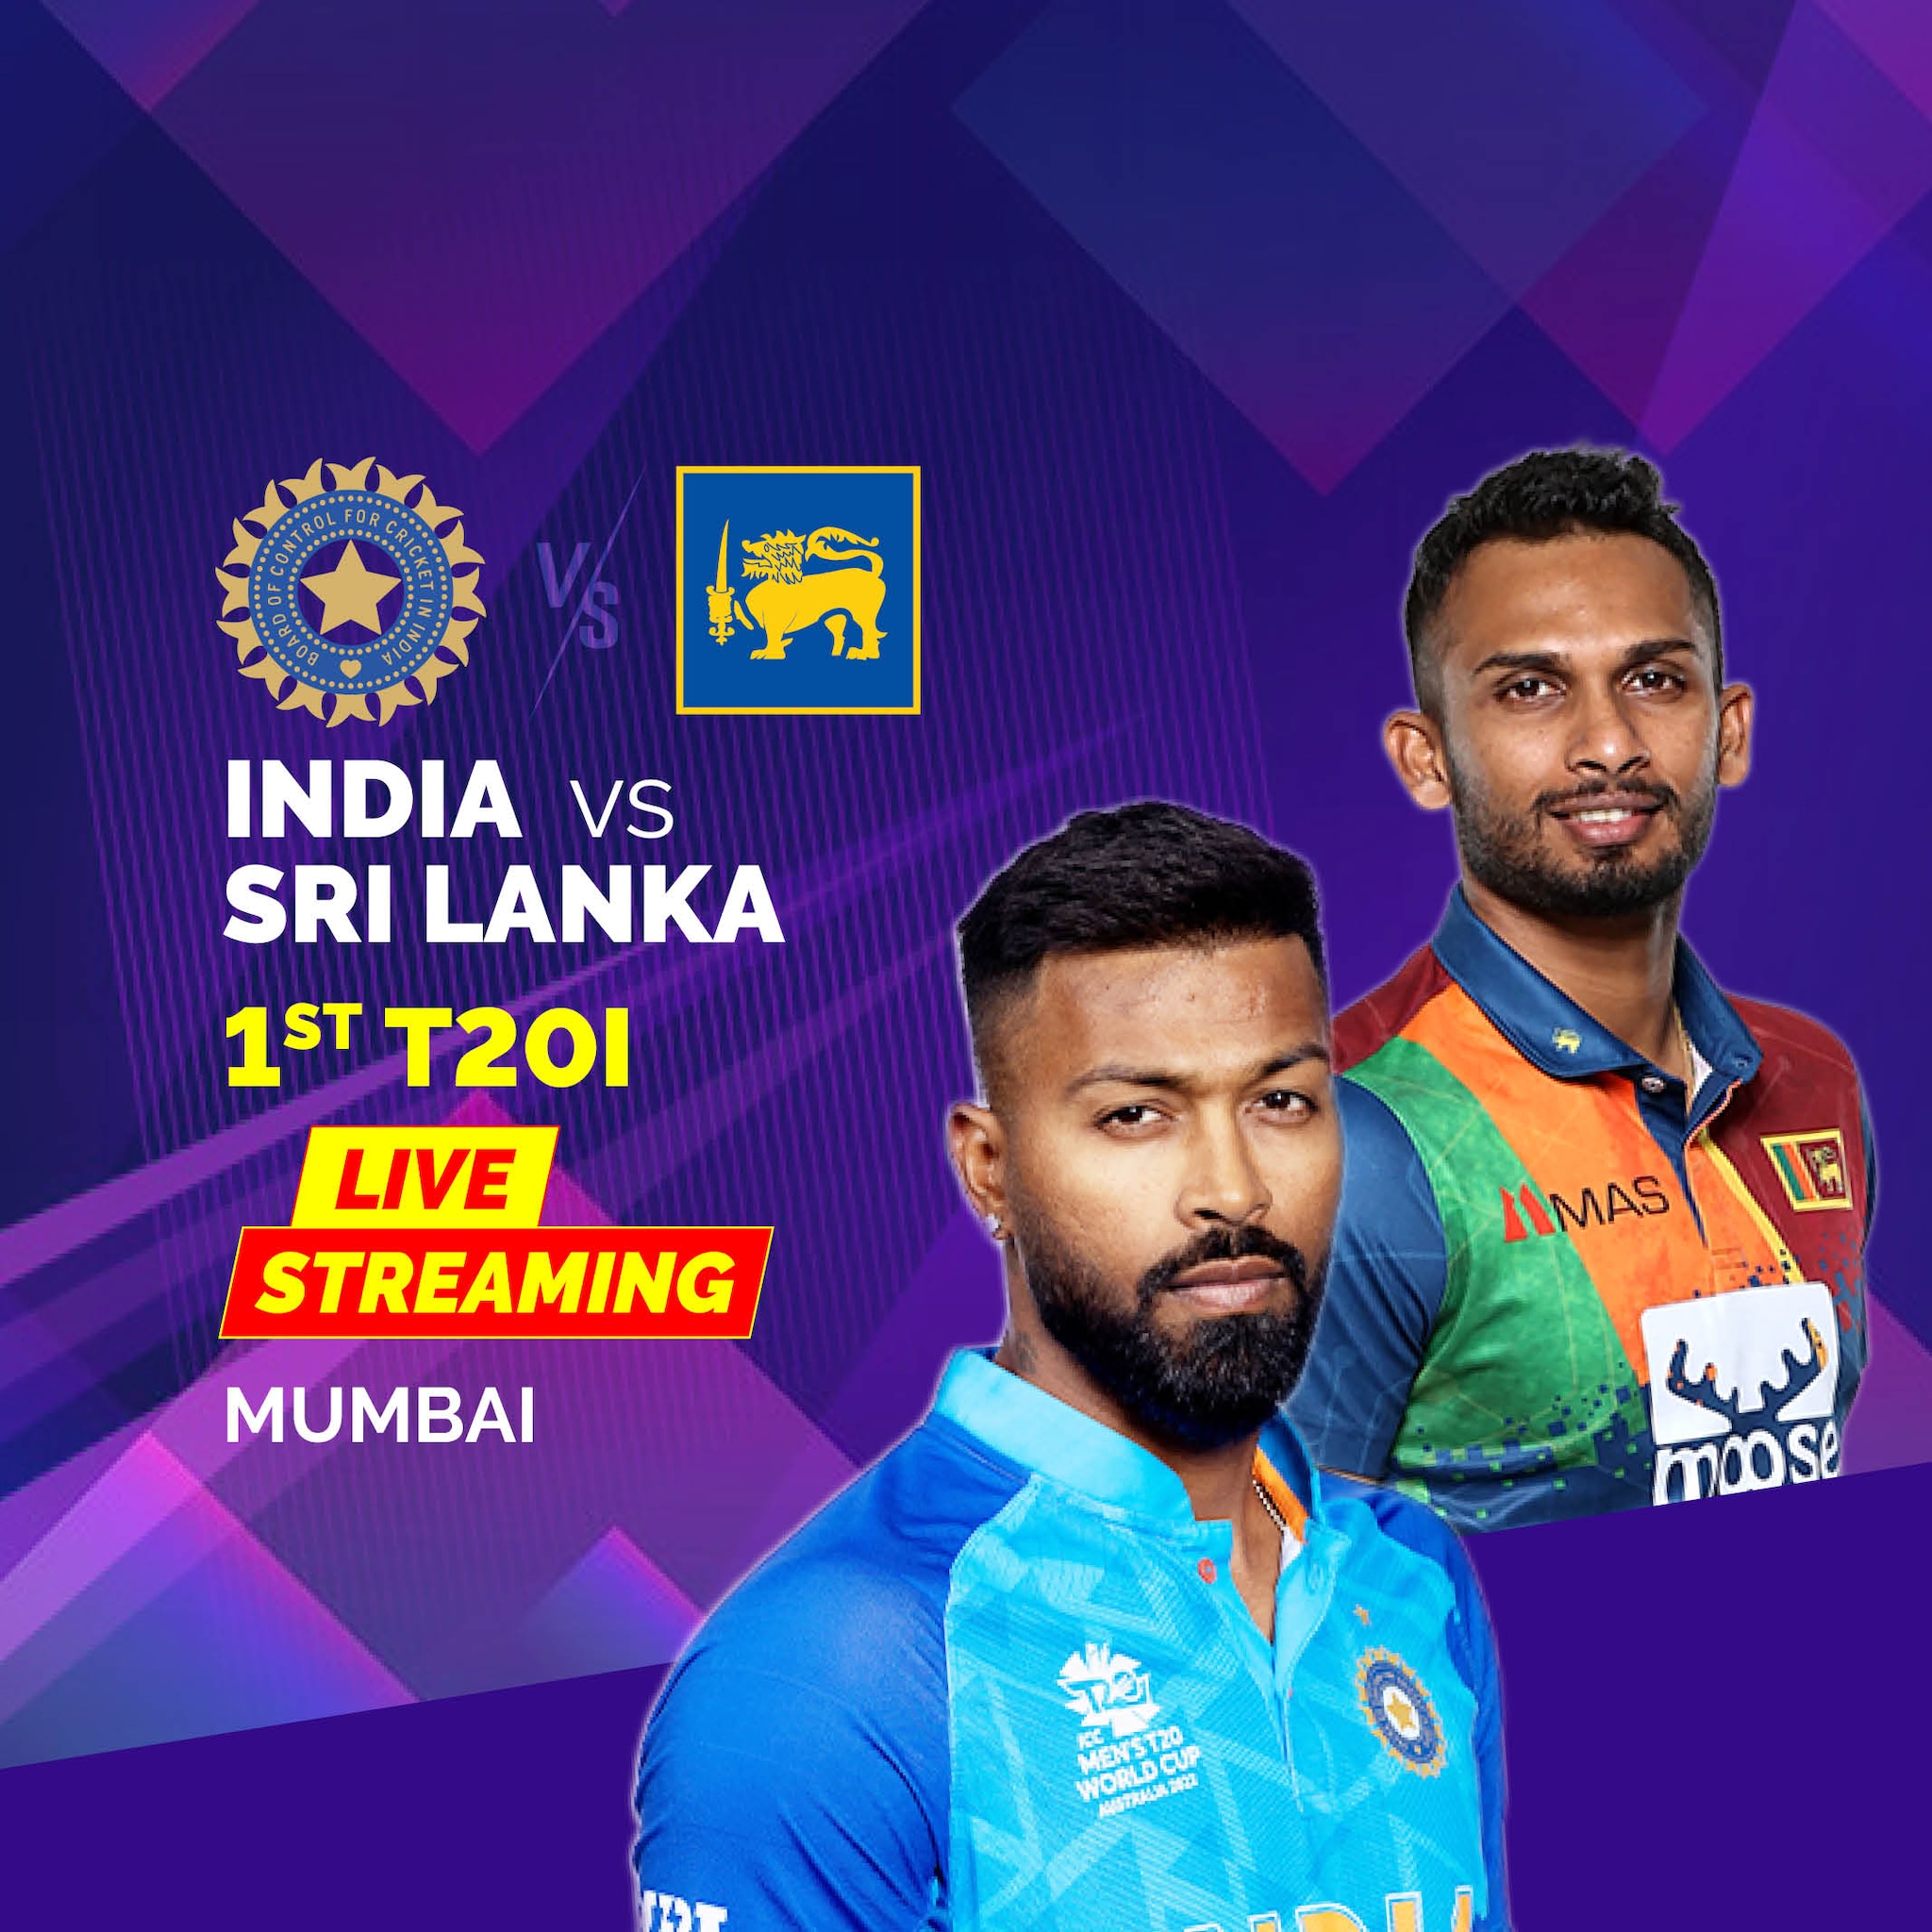 sri lanka india t20 match live video